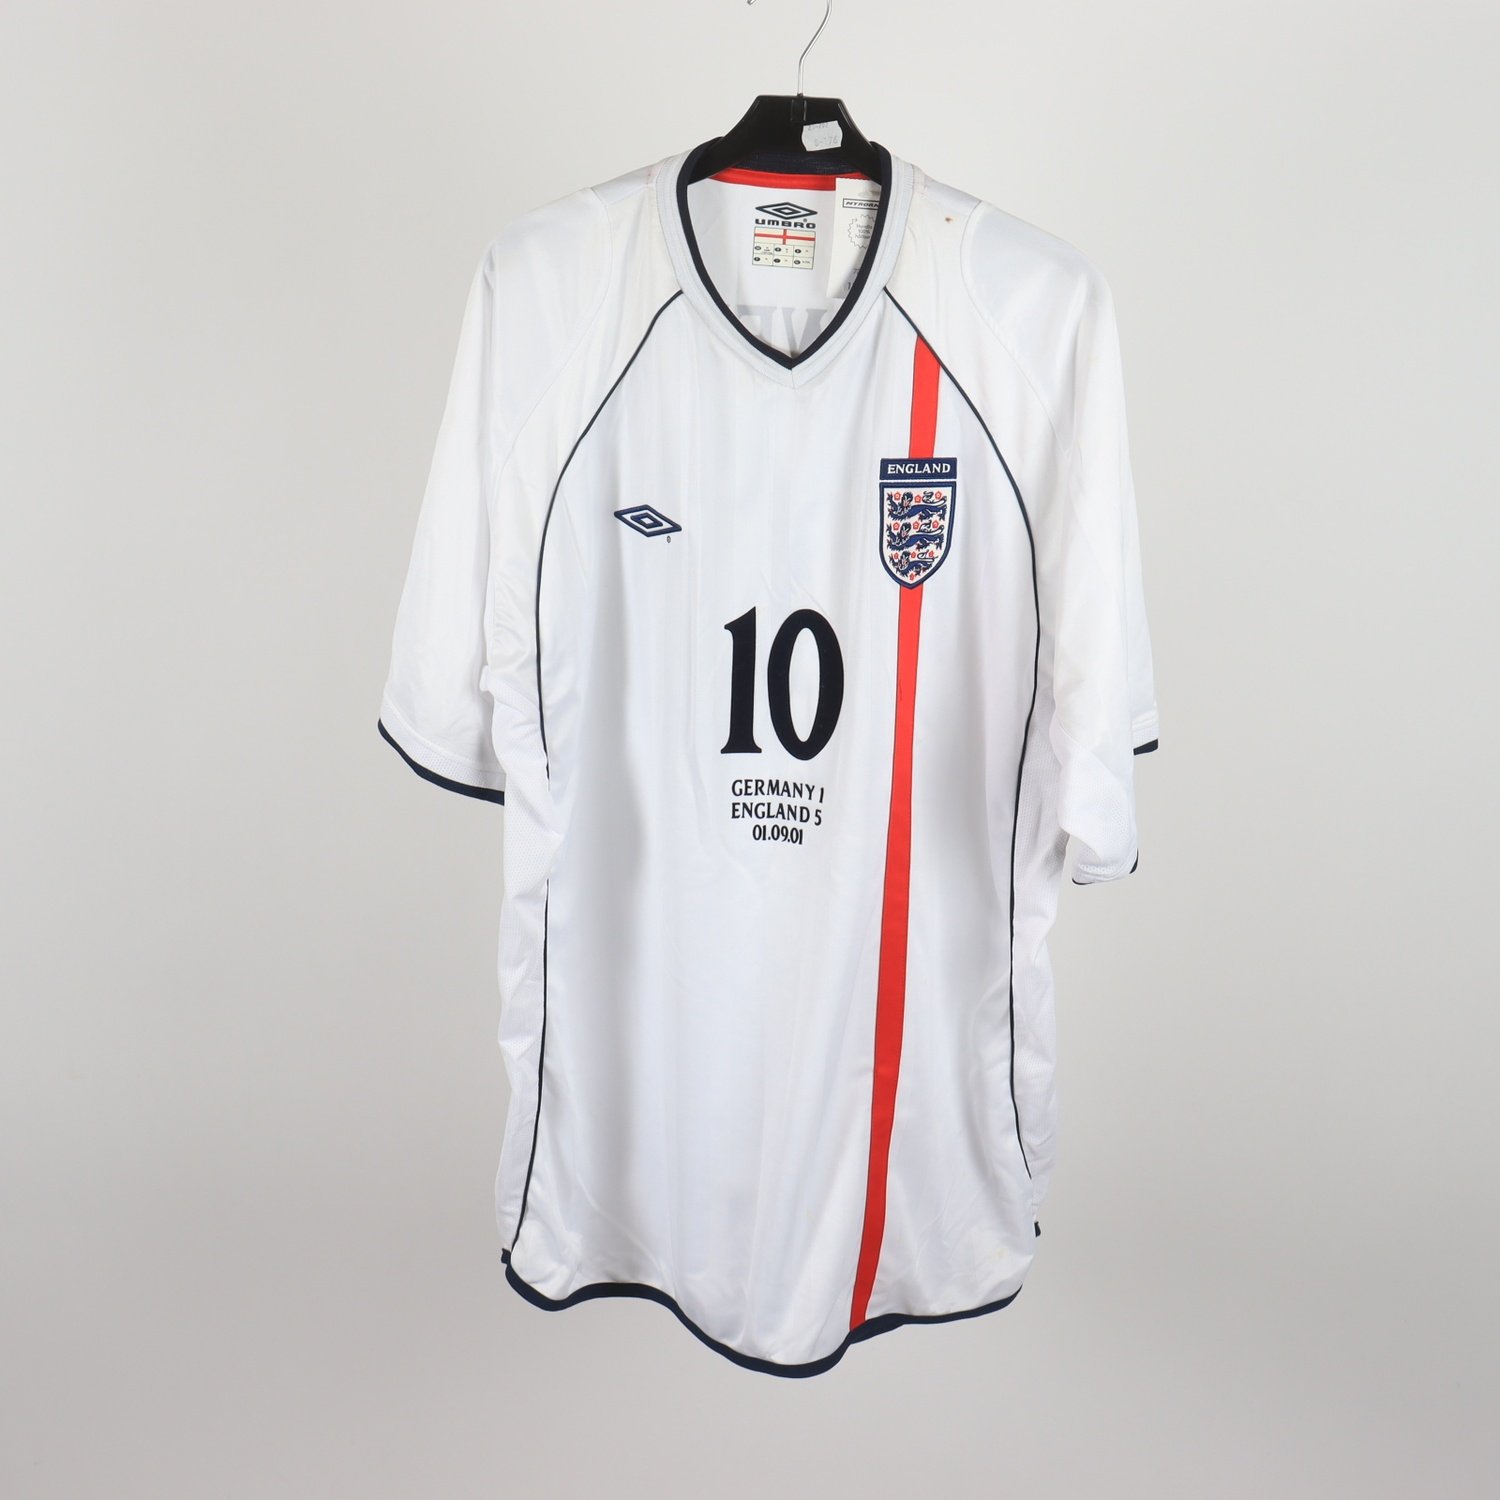 Fotbollströja, England, Umbro, Owen 10, flerfärgad, stl. XL